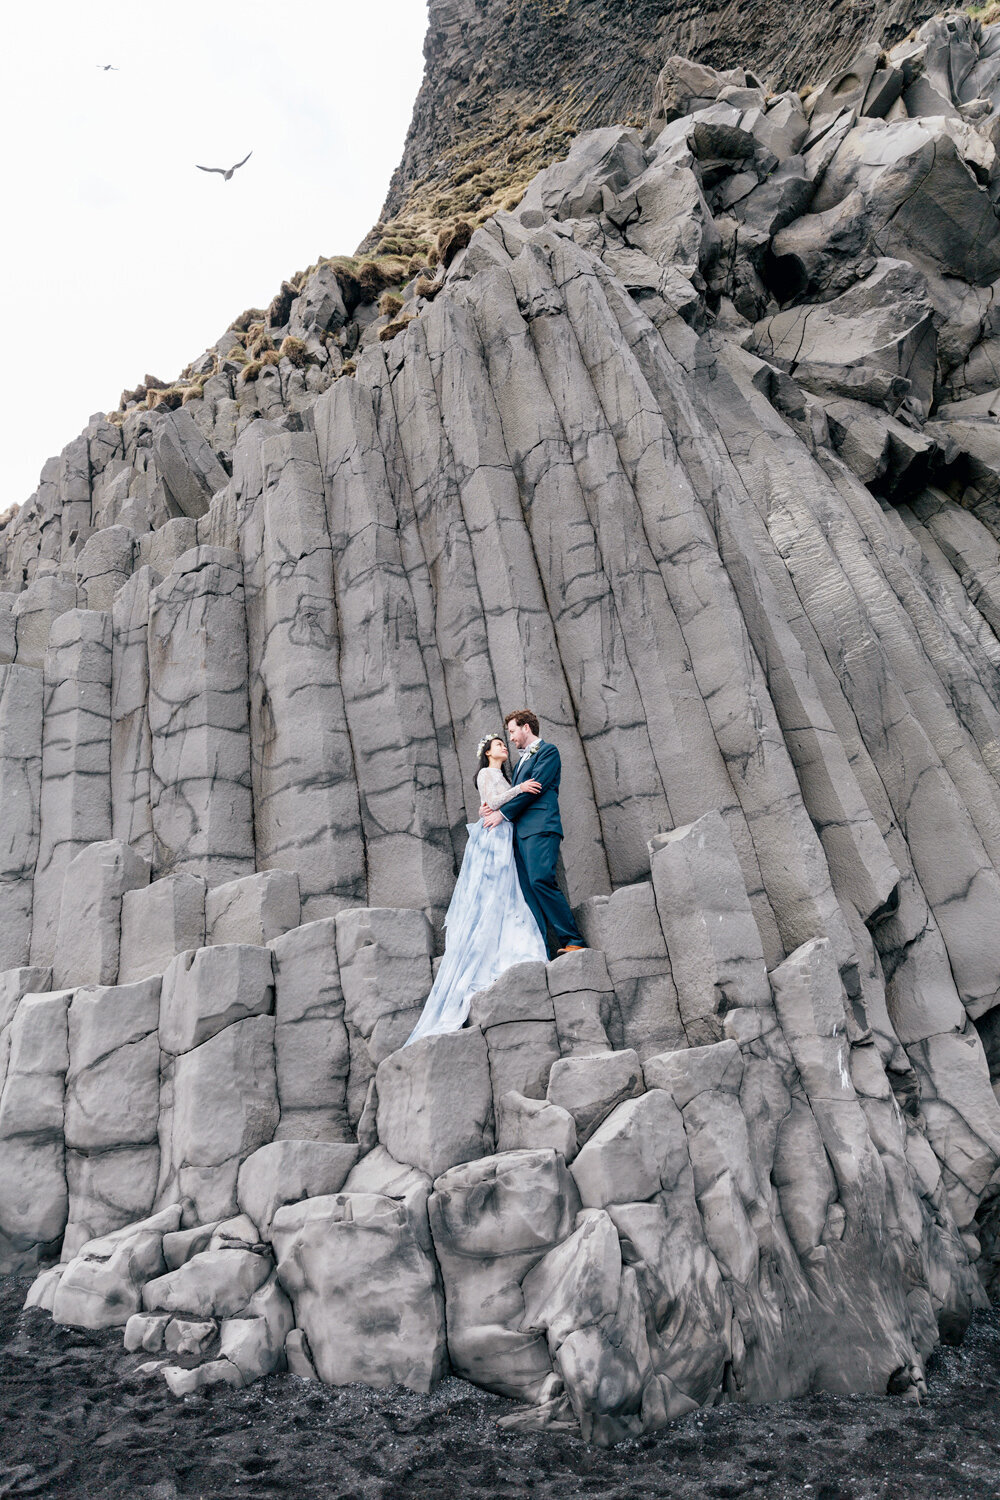 183-Emily-Wren-Photography-Iceland-Destination-Wedding